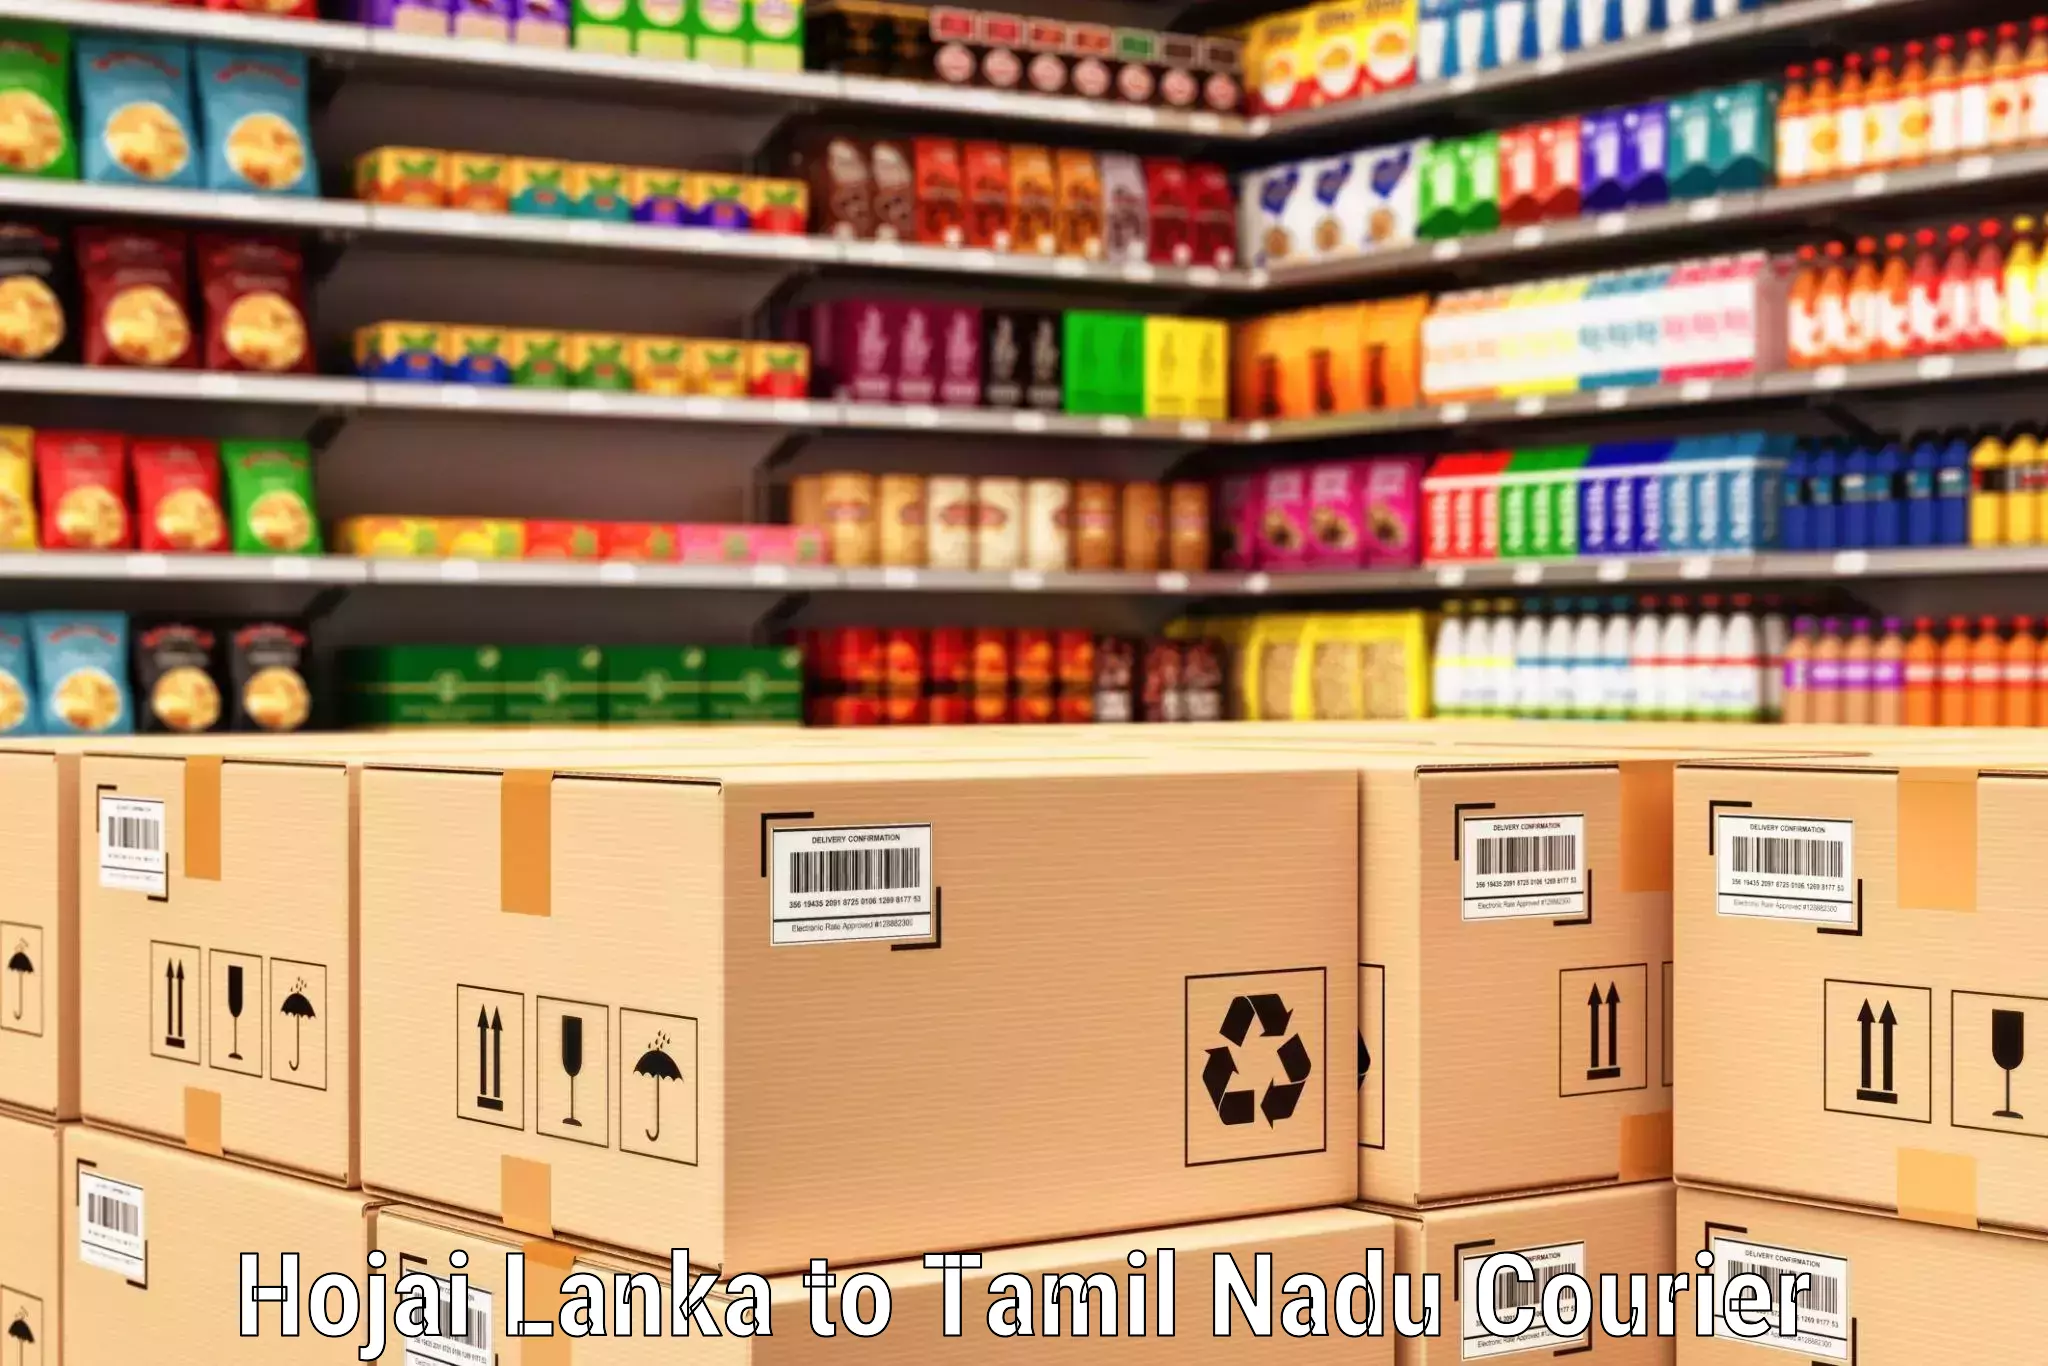 Ground shipping Hojai Lanka to Tamil Nadu